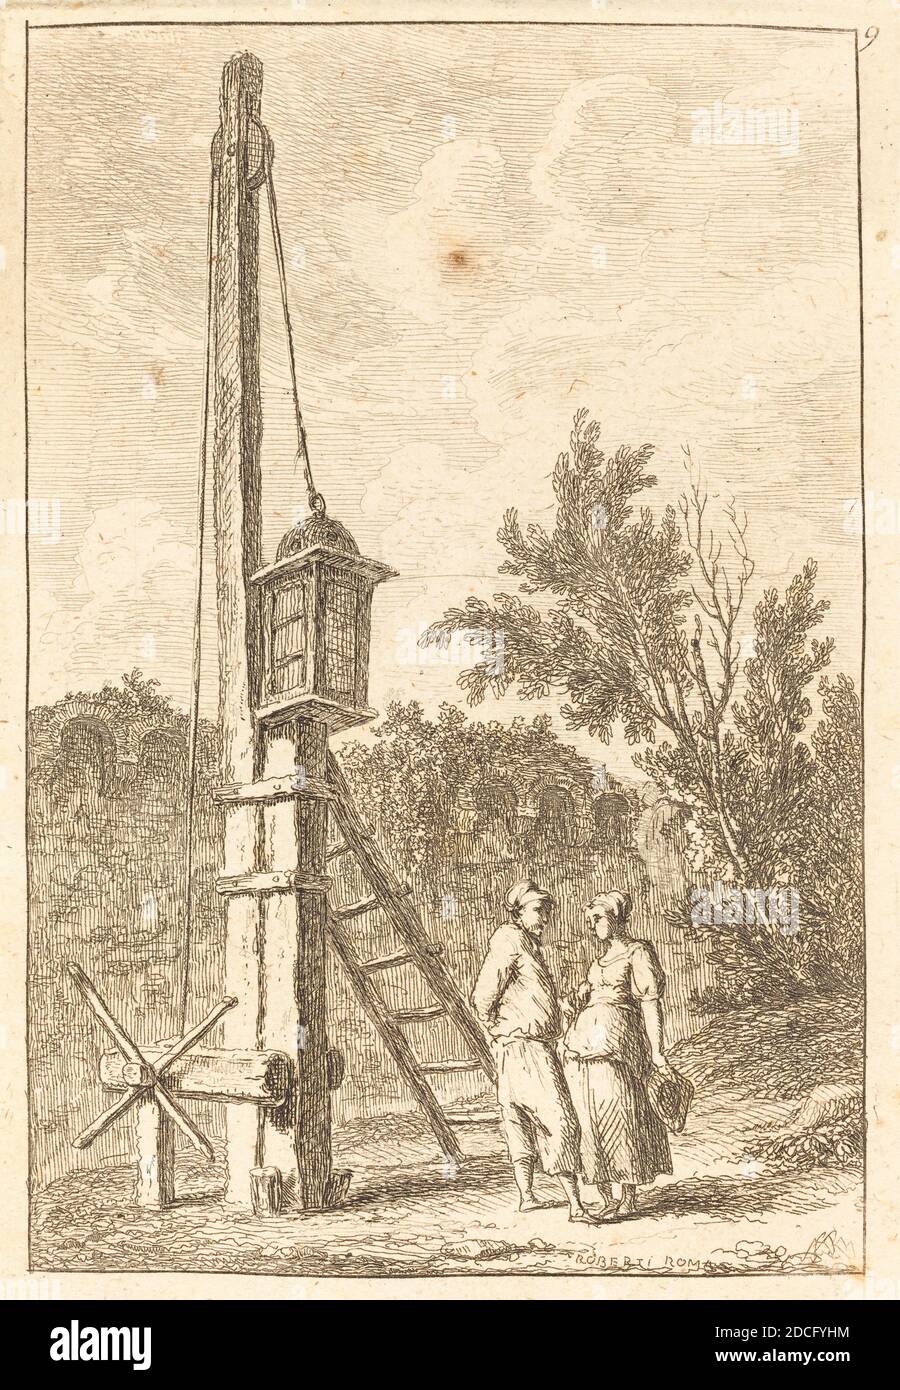 Hubert Robert, (artista), francés, 1733 - 1808, The Post, Les Soirees de Roma (tardes en Roma):pl.9, (serie), grabado Foto de stock